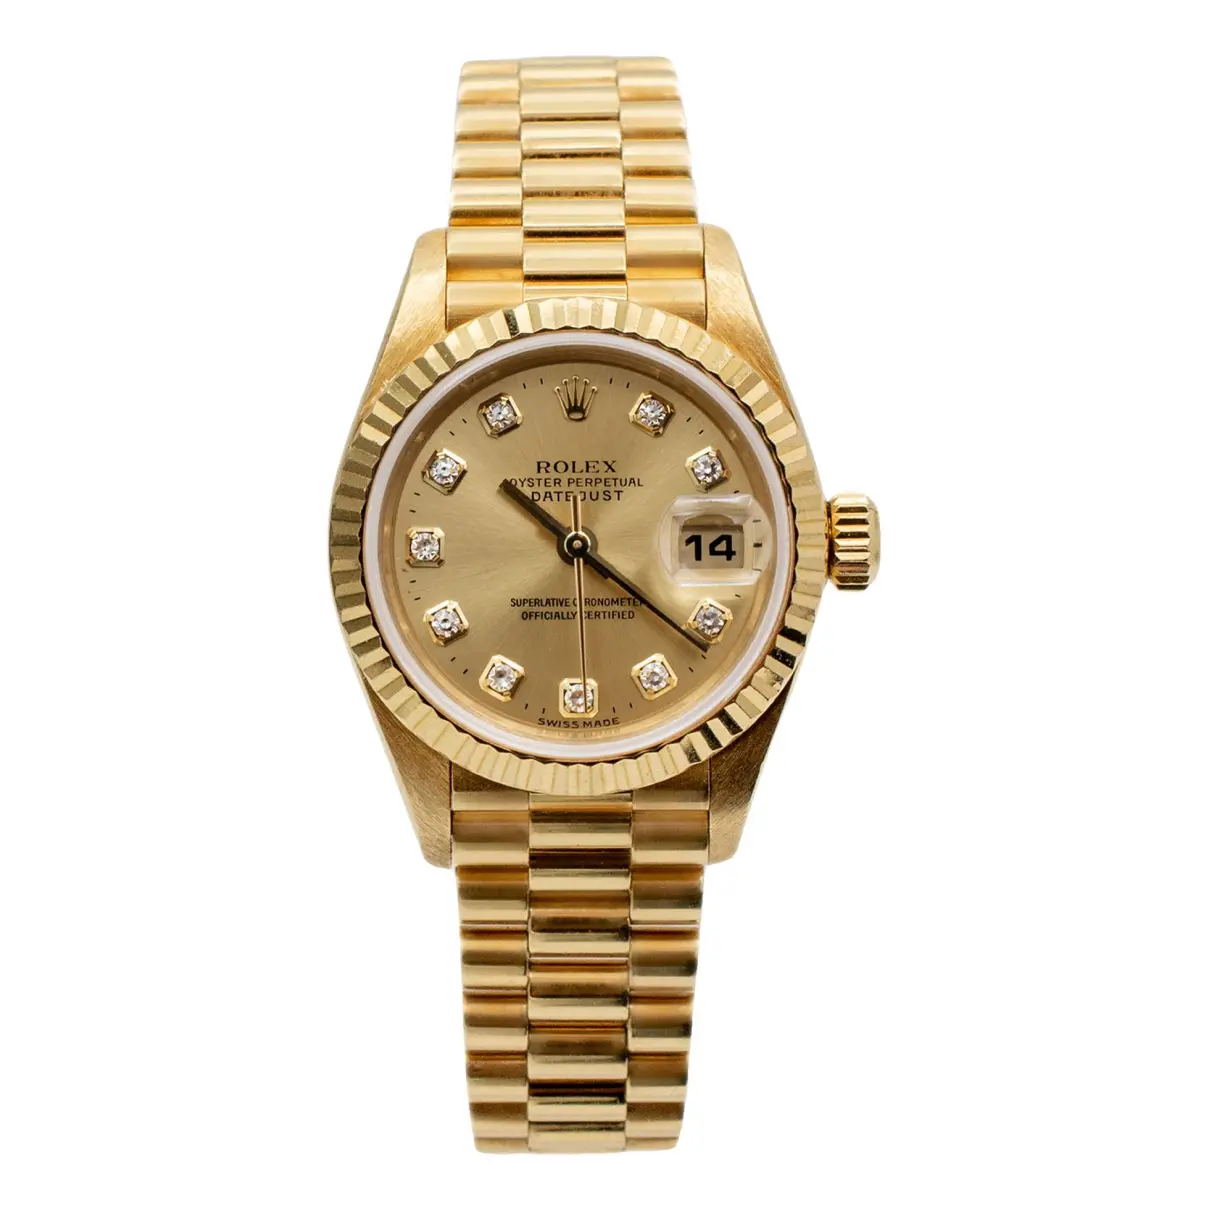 Datejust yellow gold watch